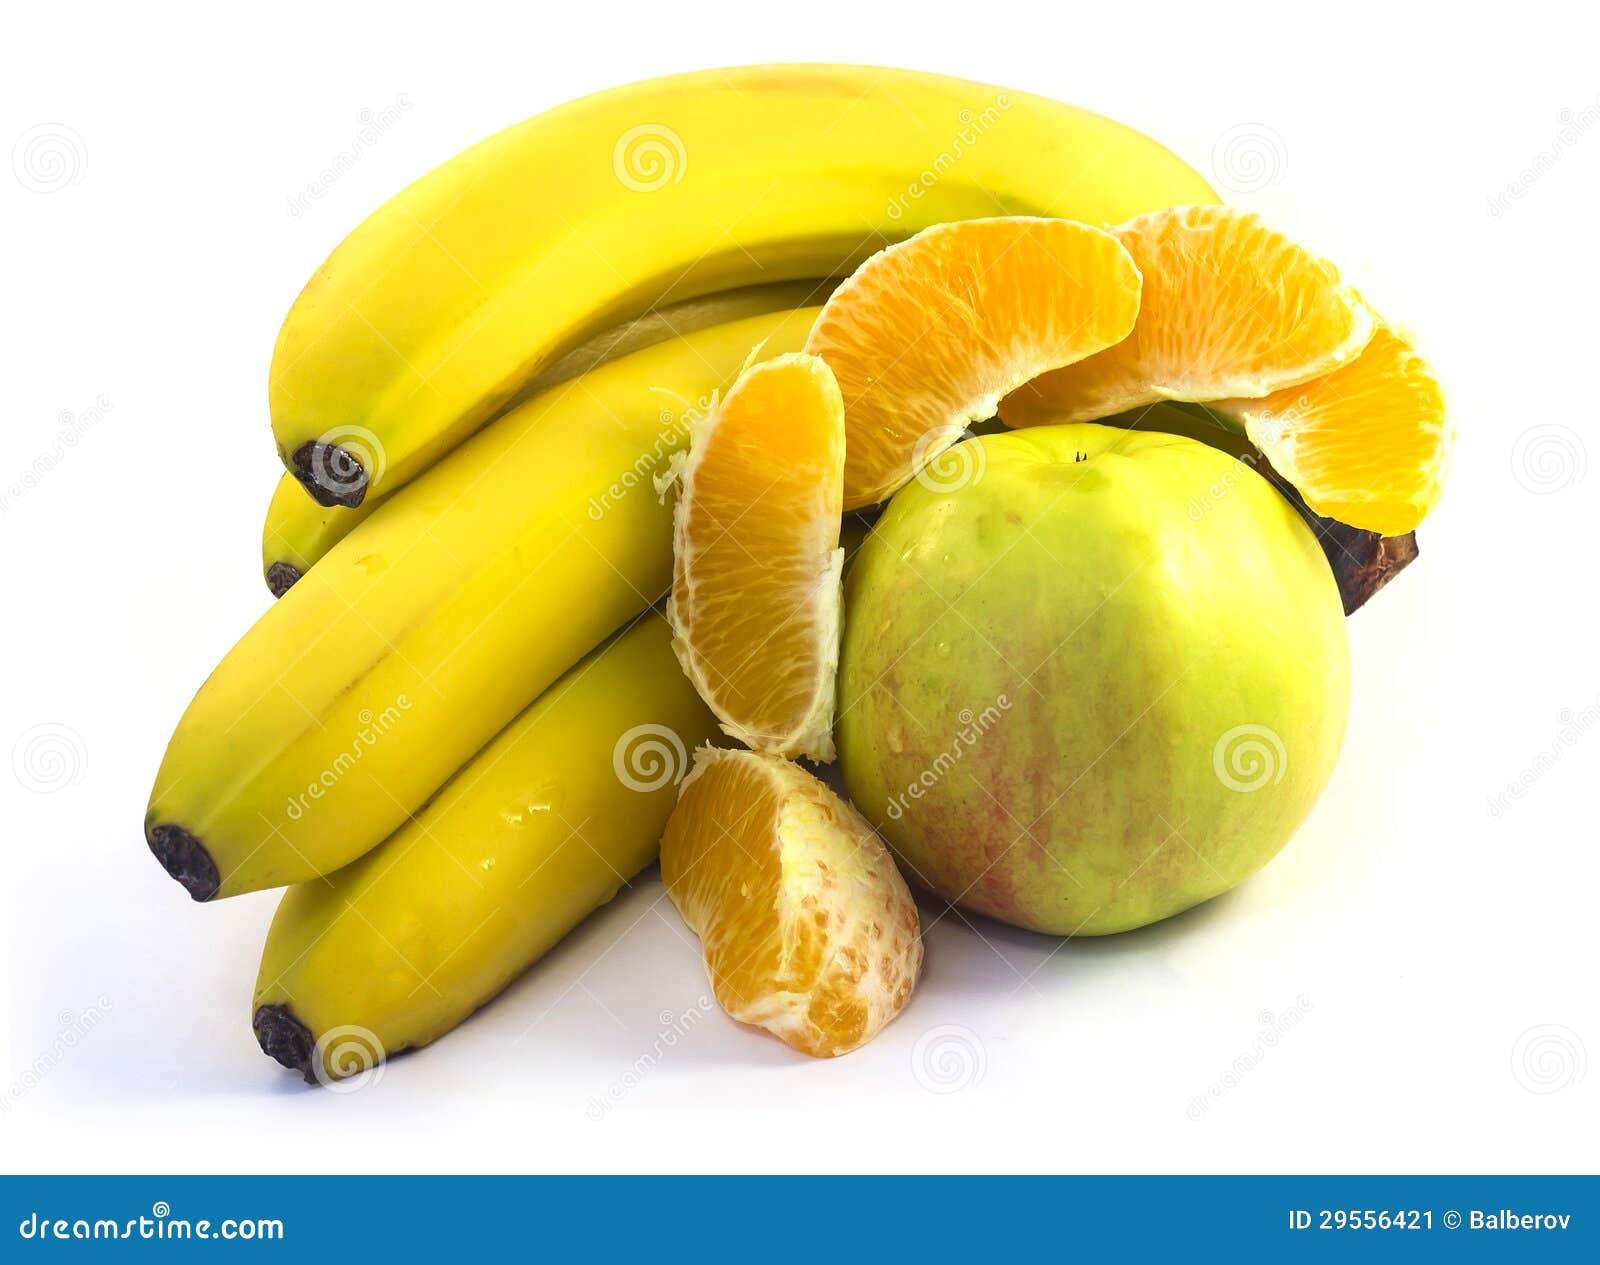 Bananas Apple And Orange Stock Image Image Of Citrus 29556421